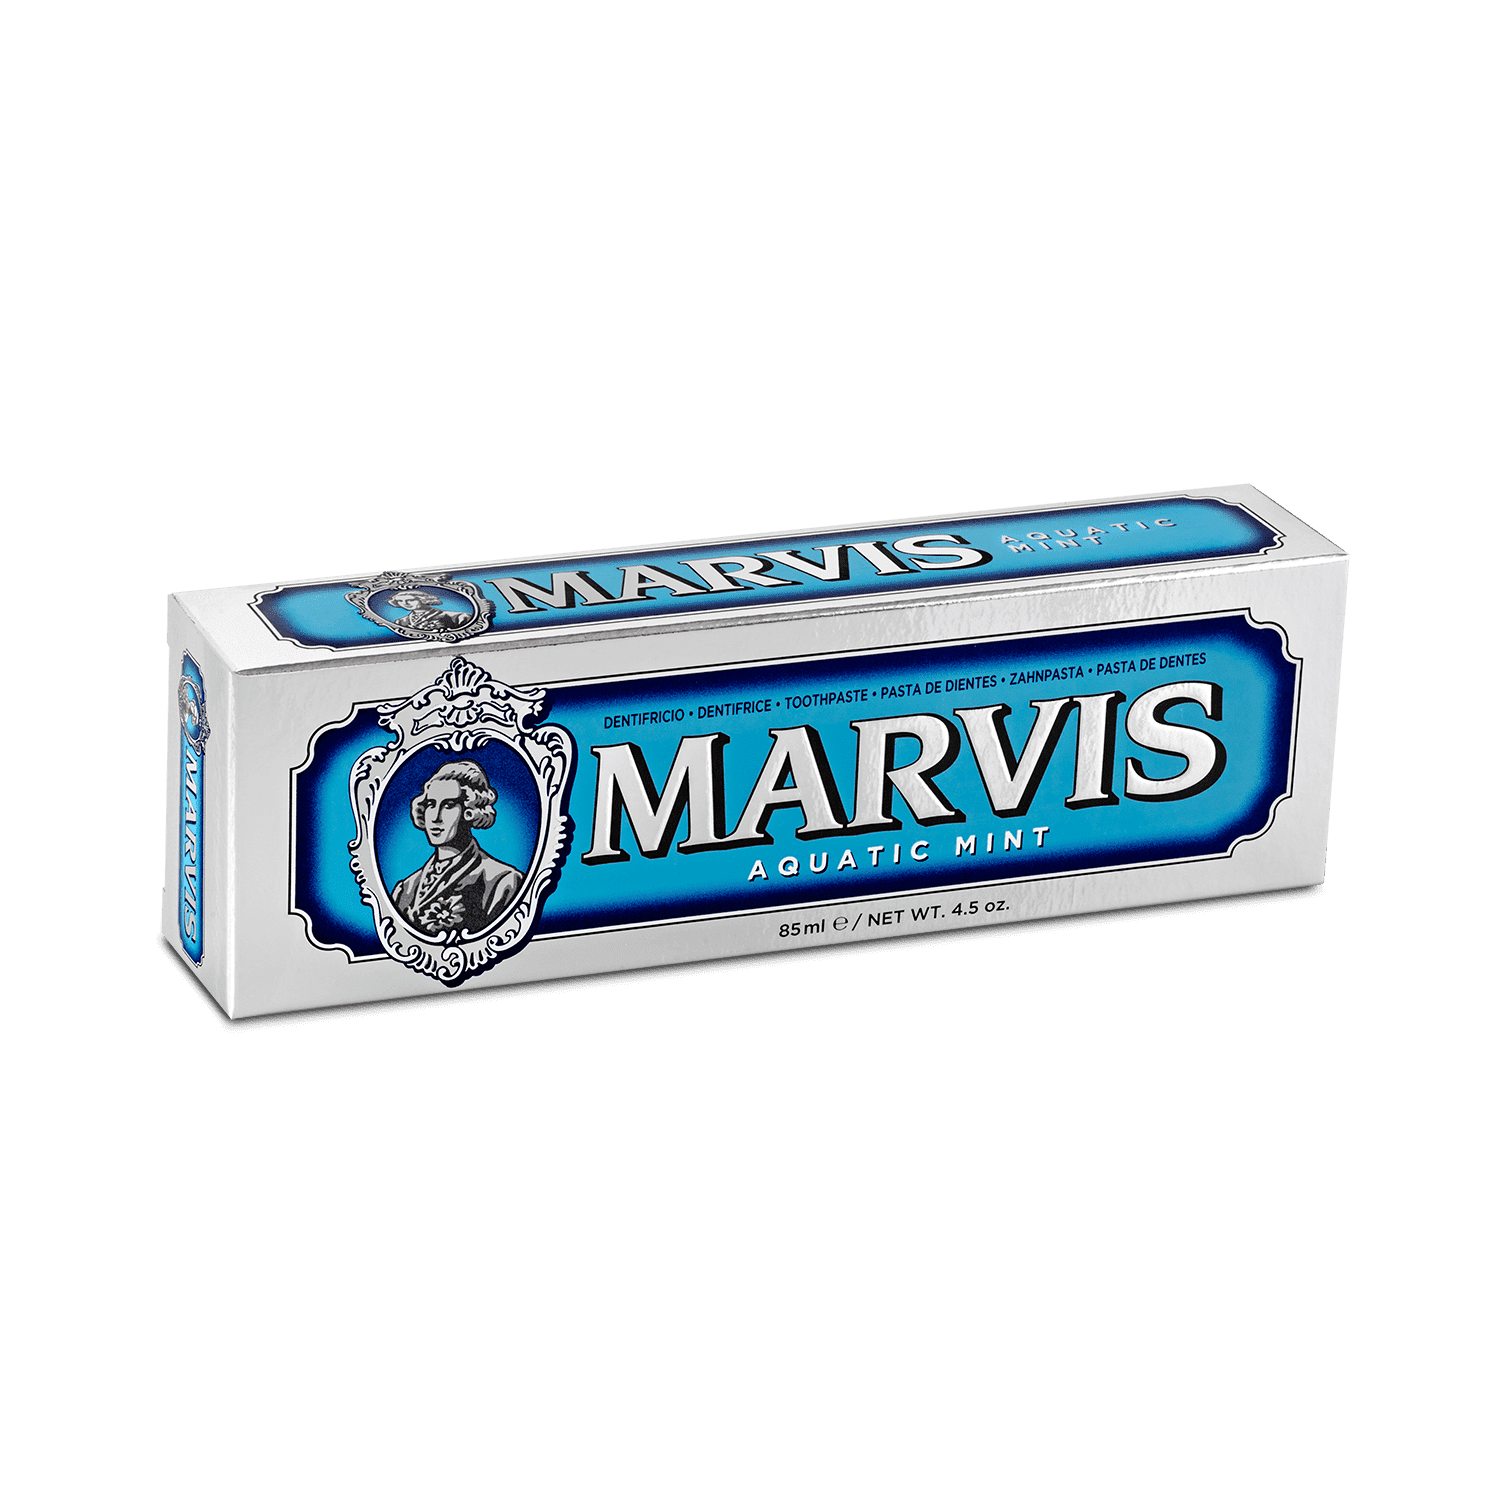 Marvis Aquatic Mint Toothpaste (75ml)